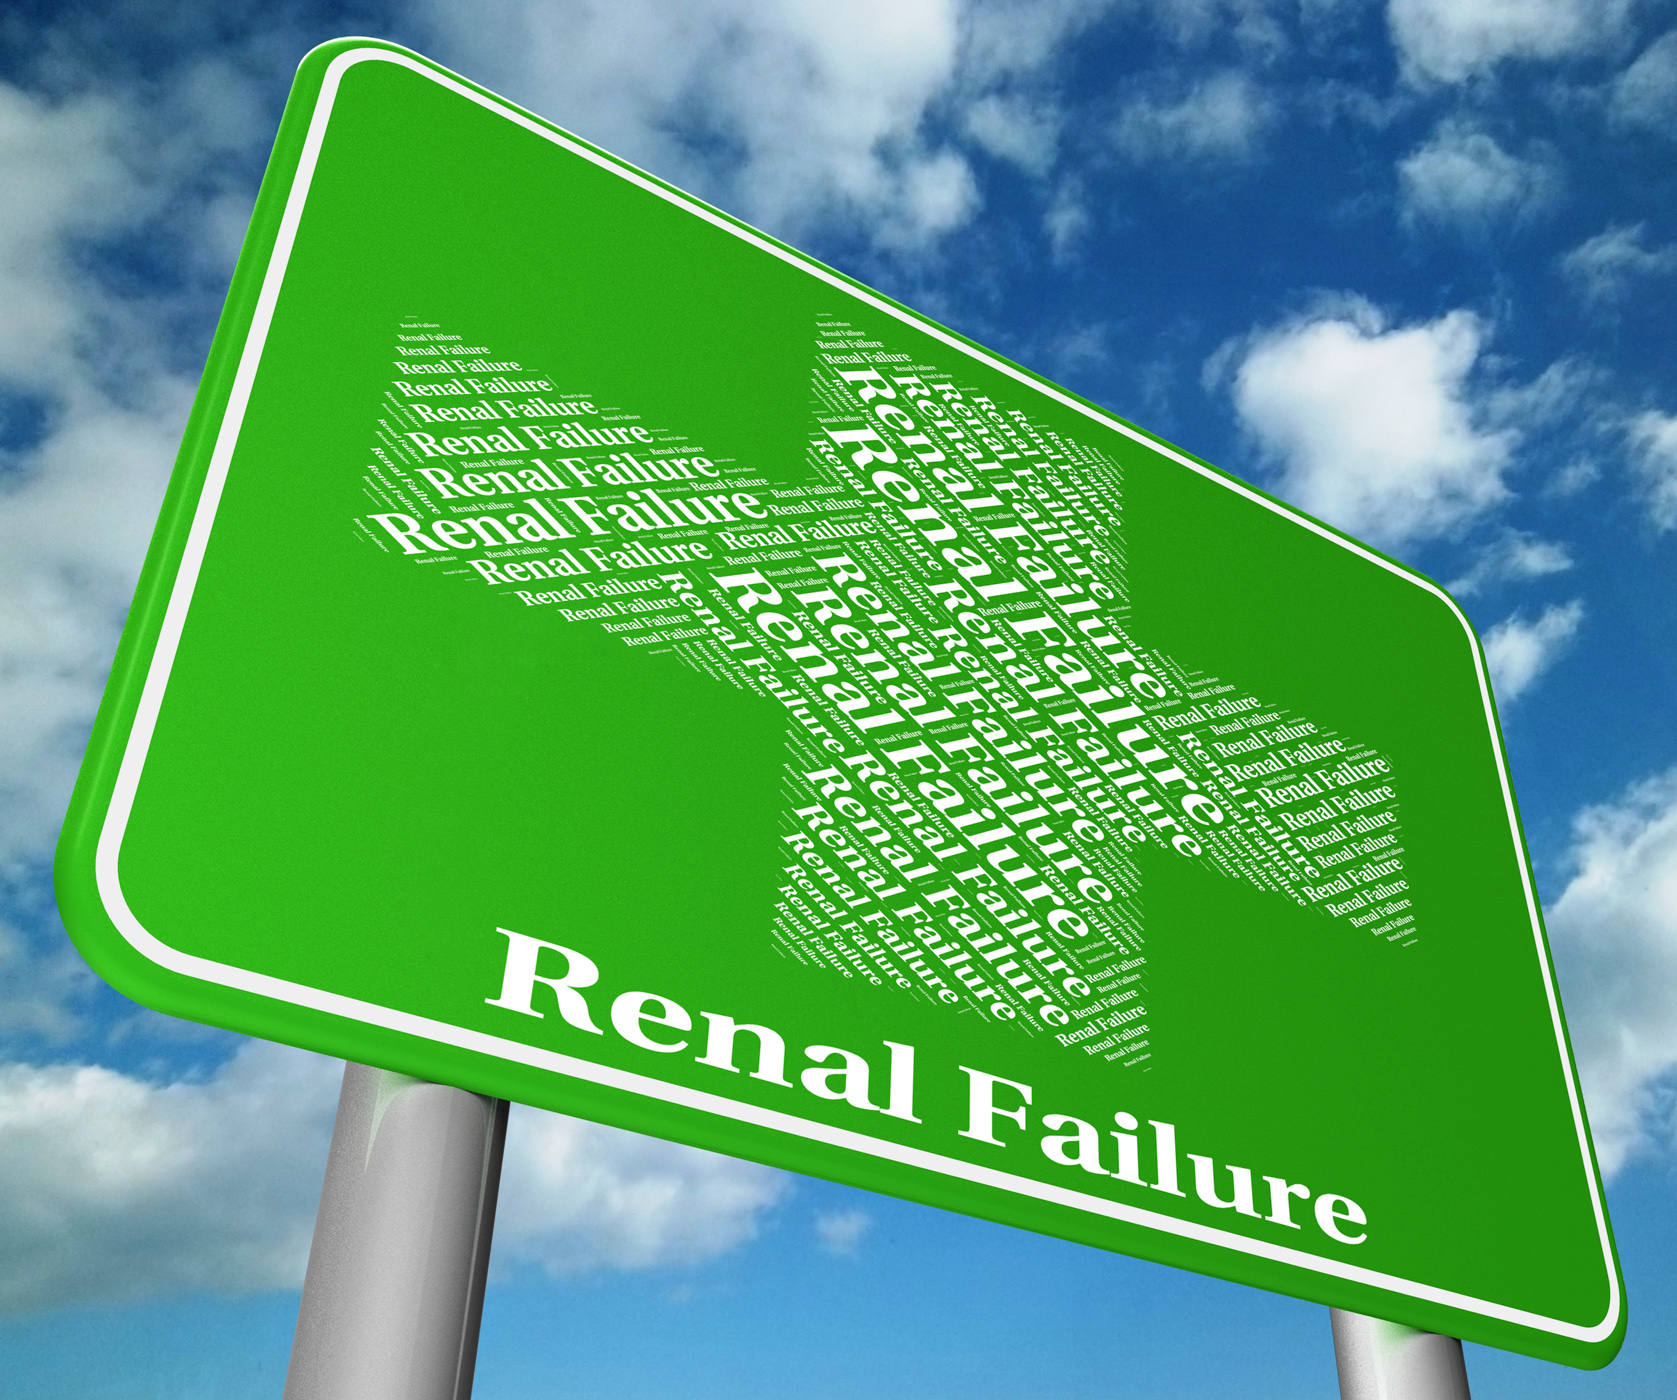 Renal failure represents lack of success and ailments photo